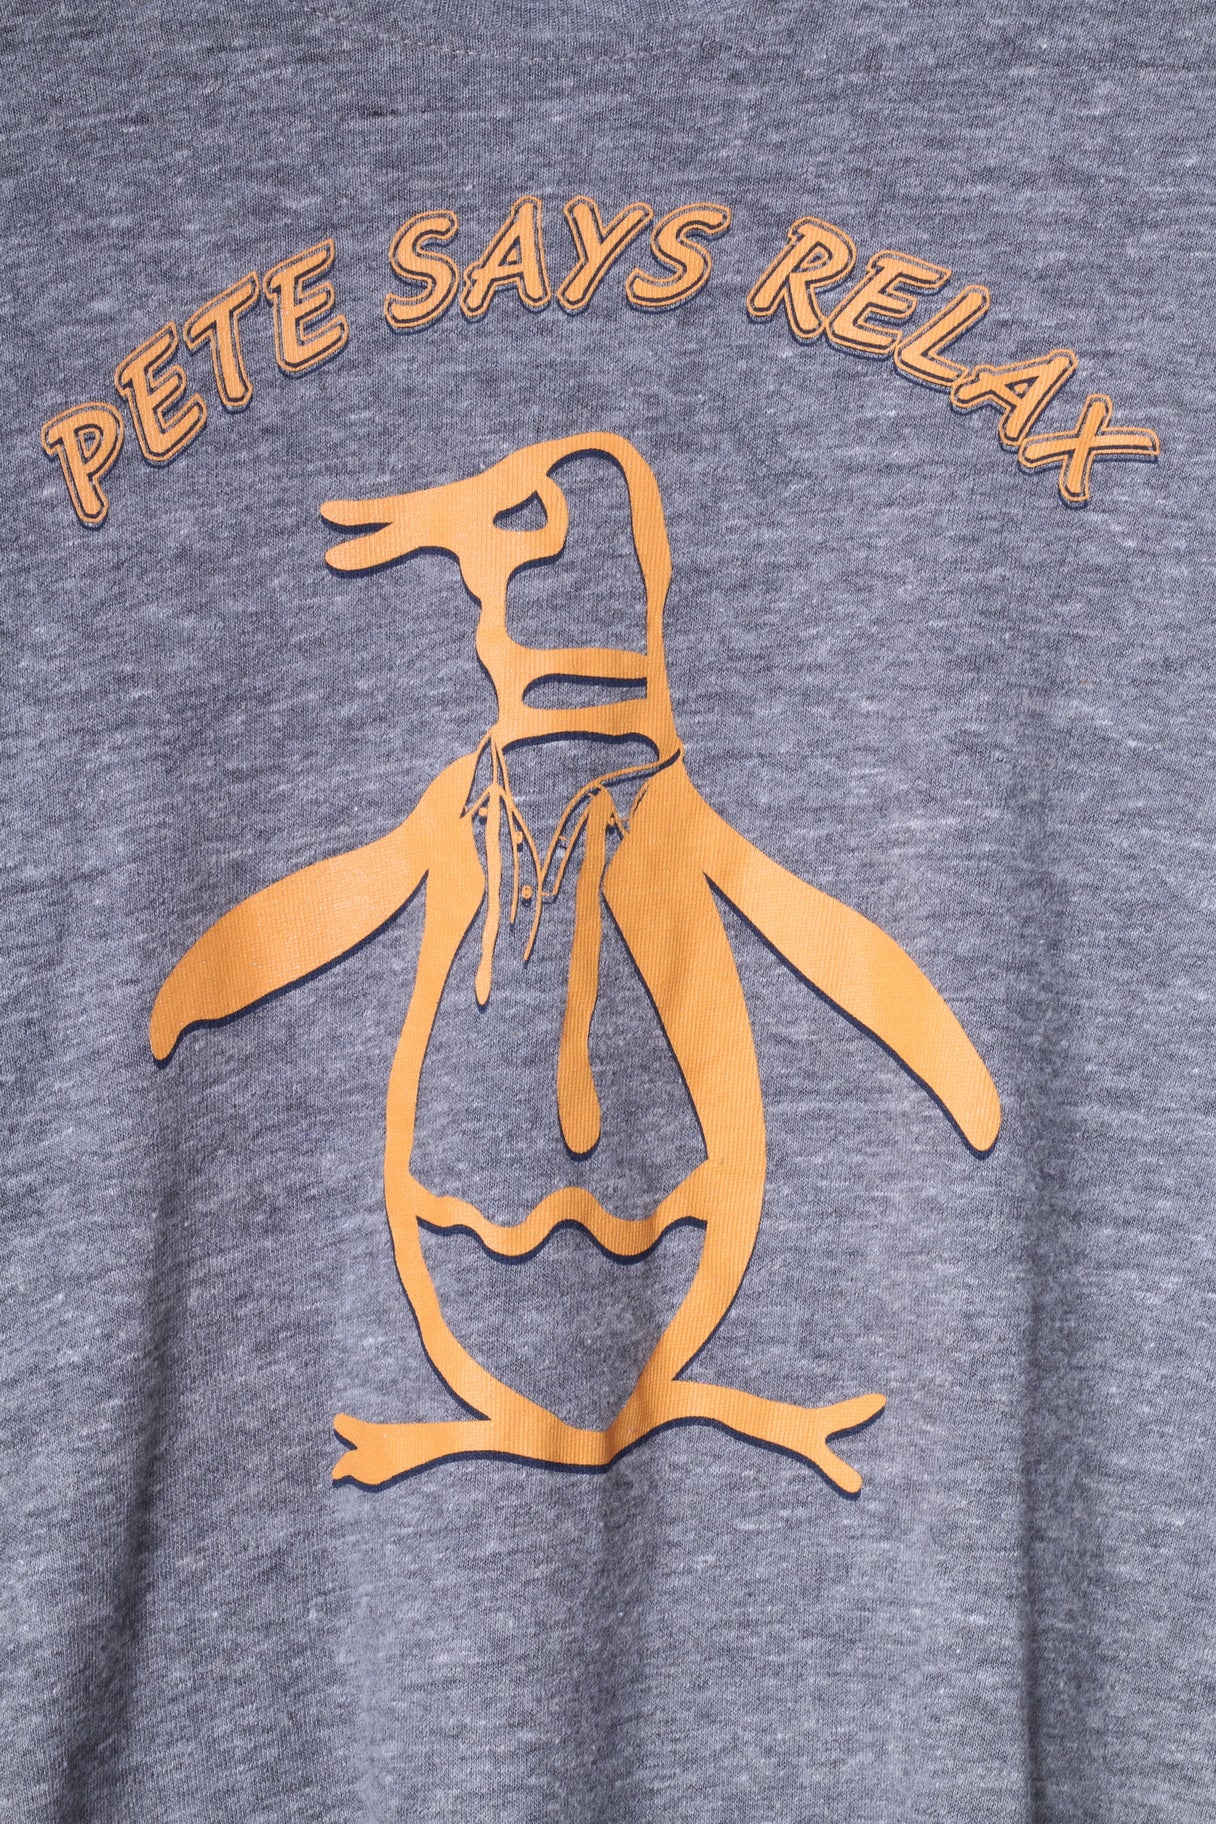 Penguin Mens L T-Shirt Grey Cotton Stretch Crew Neck Graphic Relax